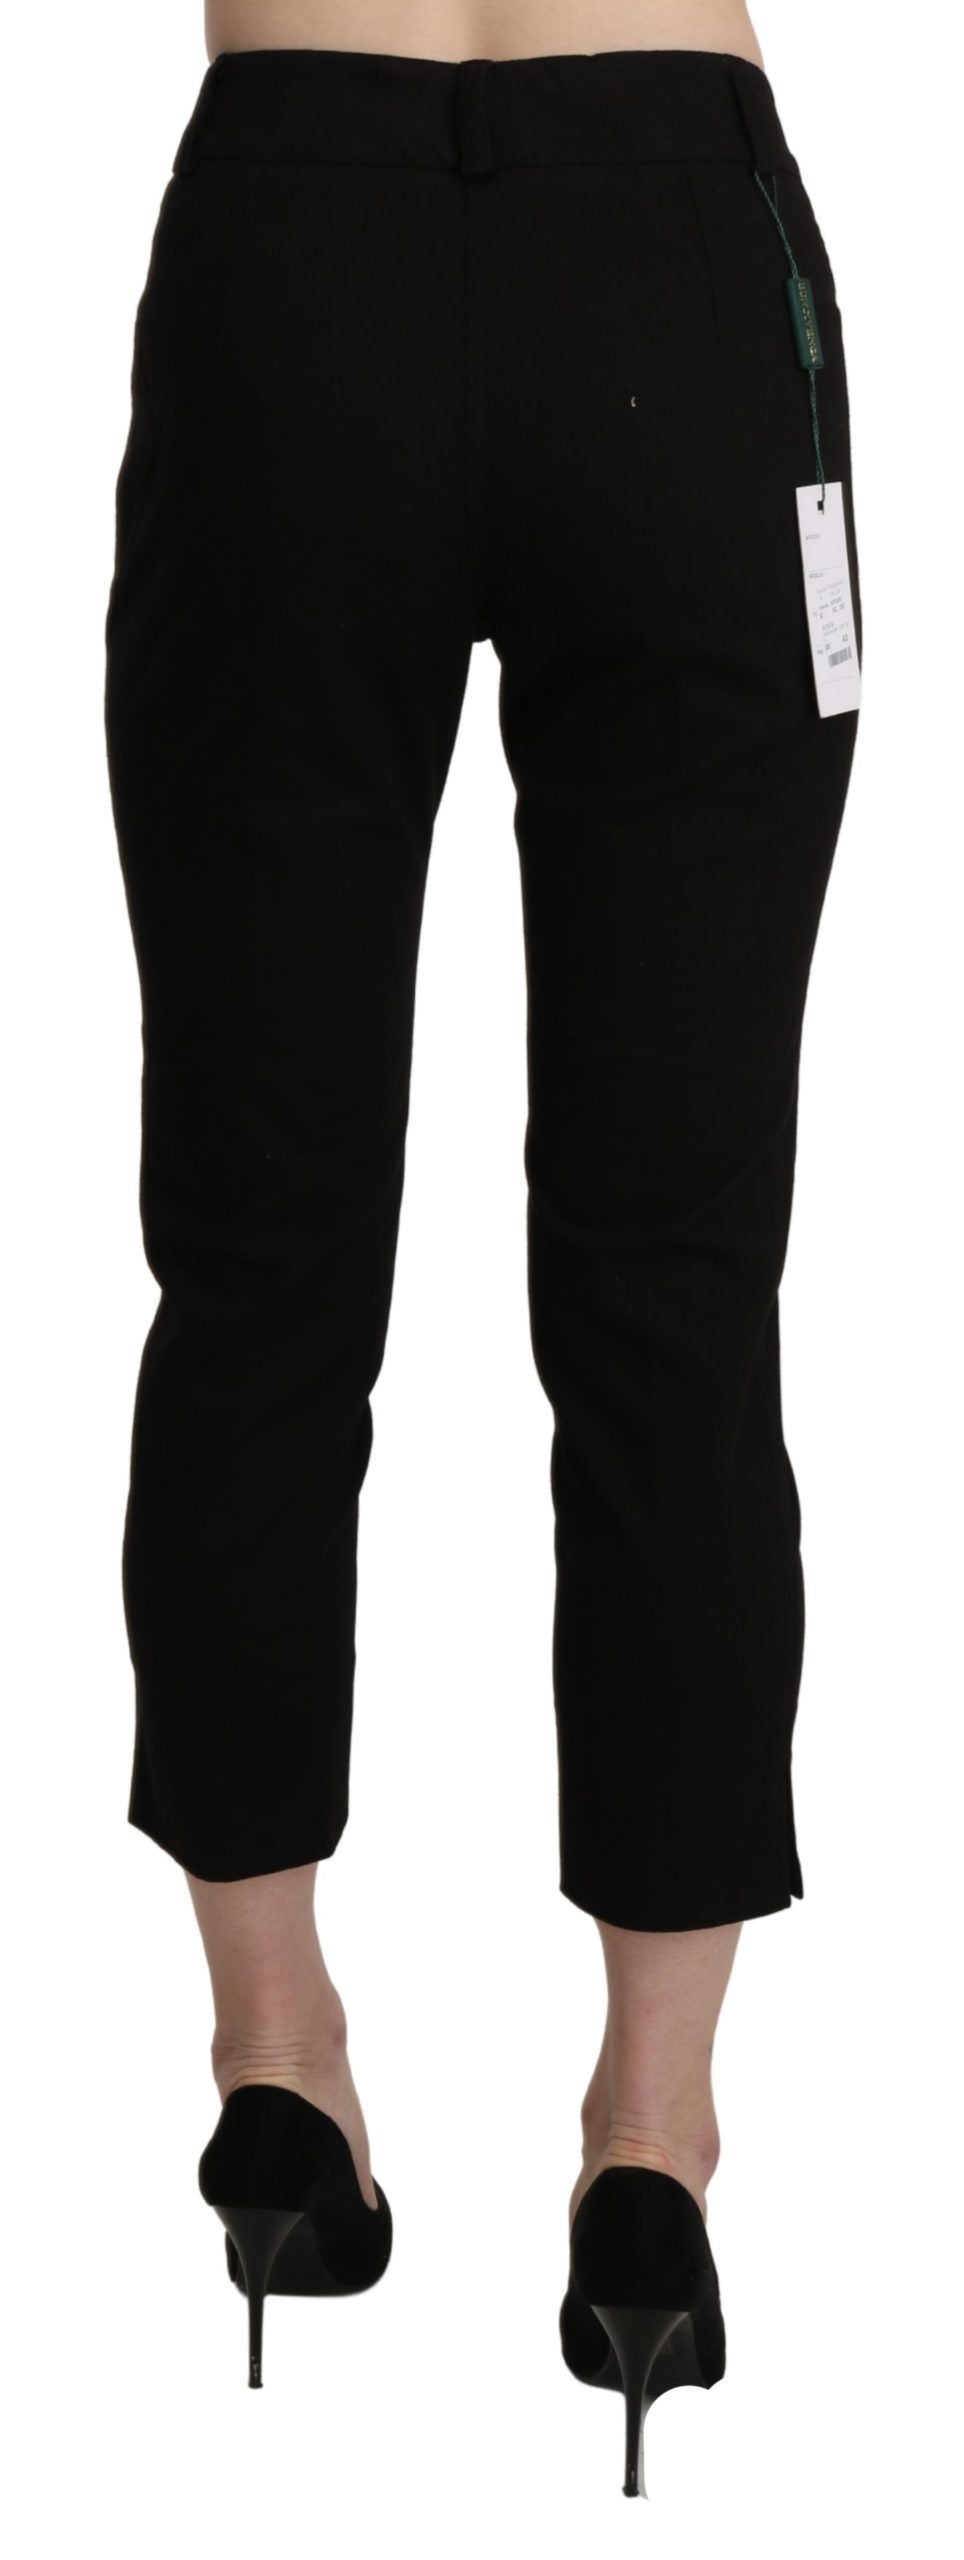 Bencivenga schwarz hohe Taille dünne Kleidungshosen Hosen Hosen